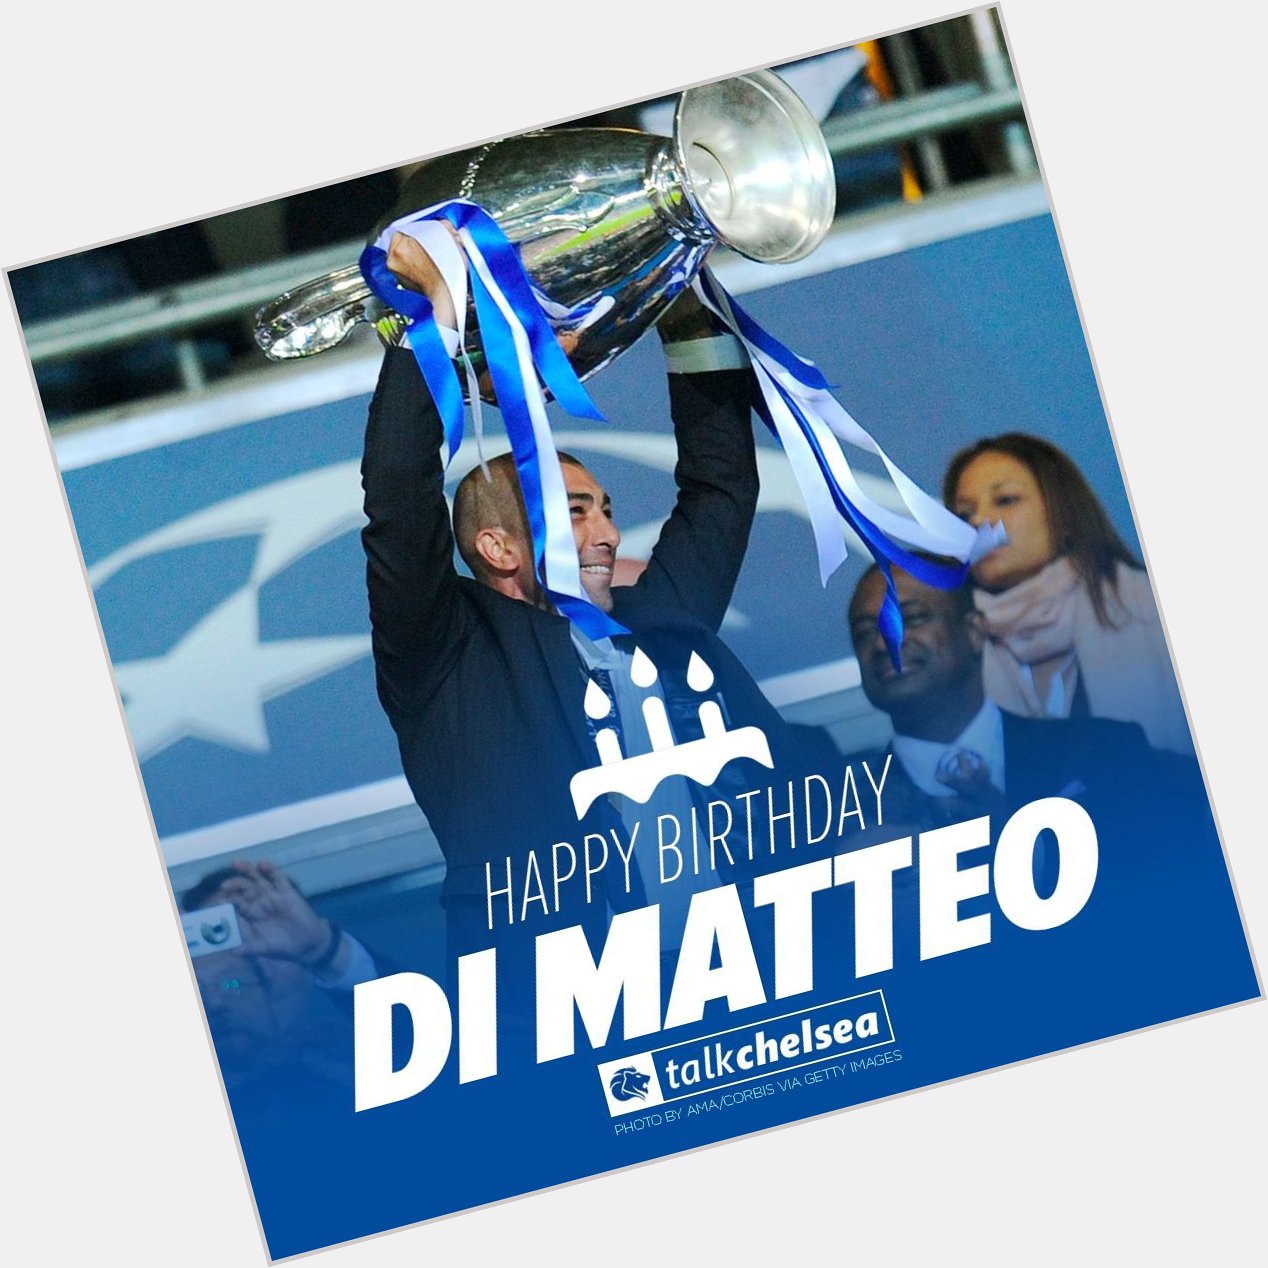 He s won Chelsea the Champions League! Happy Birthday to Roberto Di Matteo 